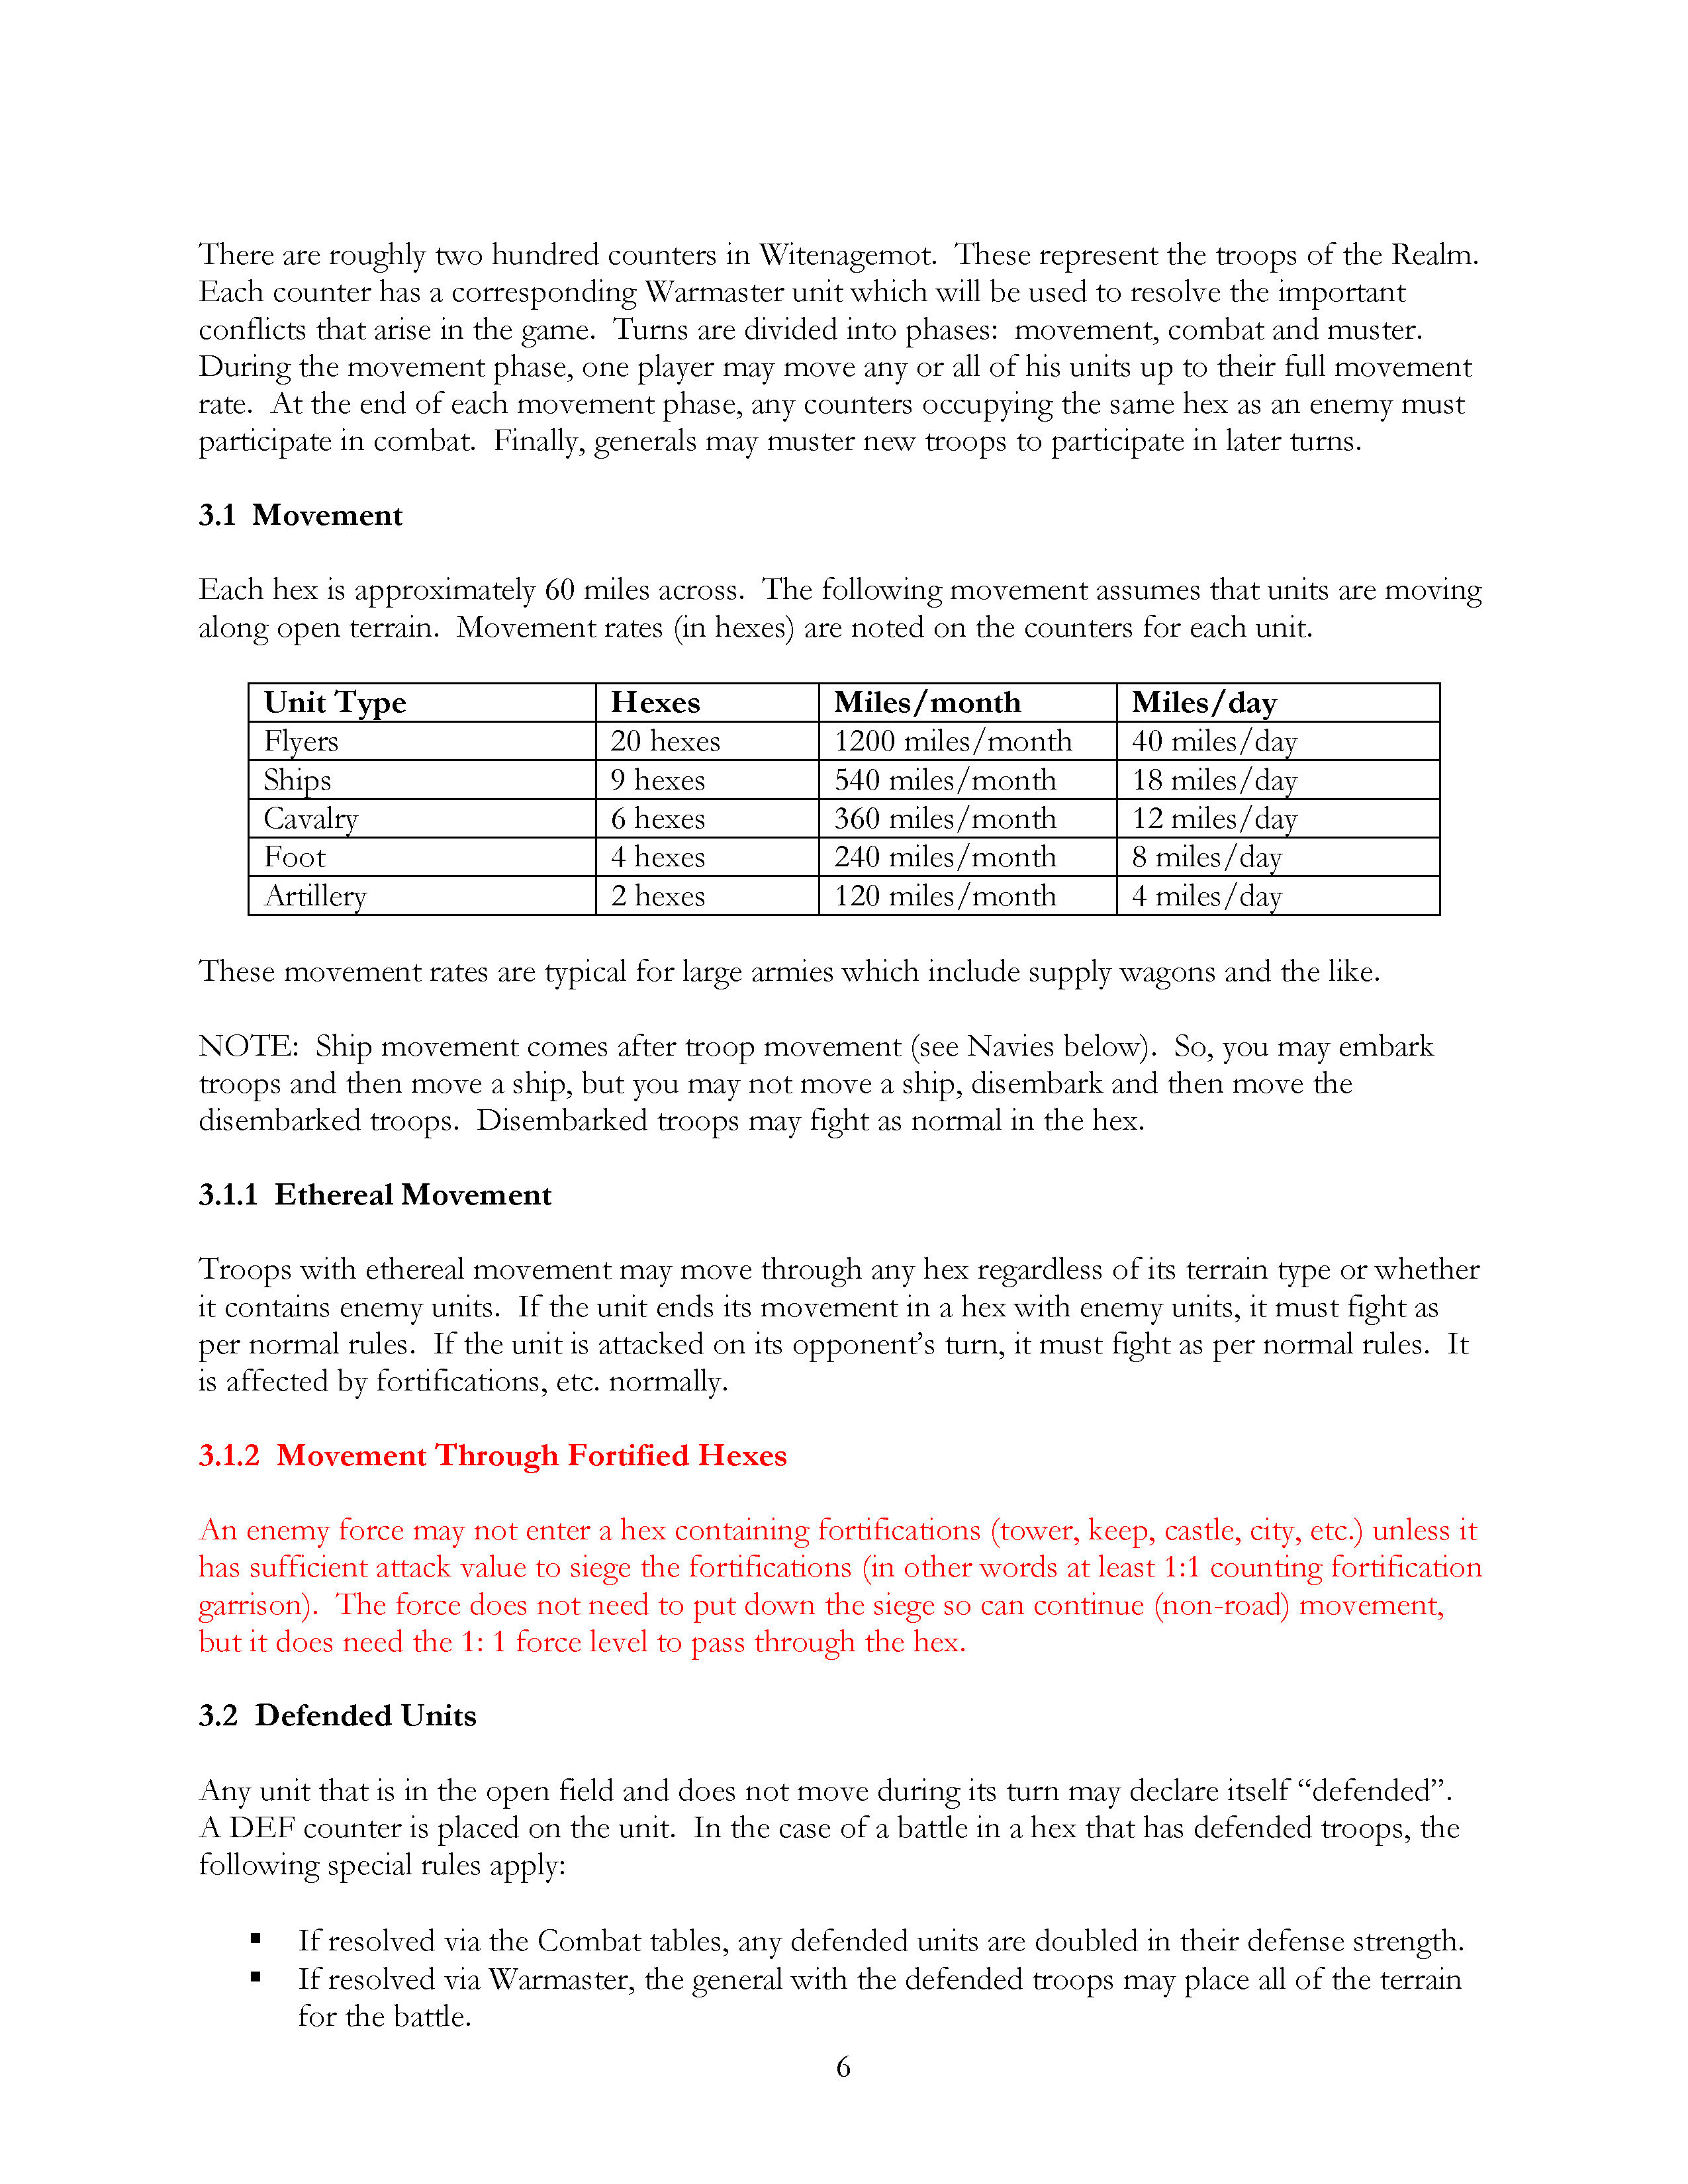 Witenagemot Rules 8 Page 07.jpg